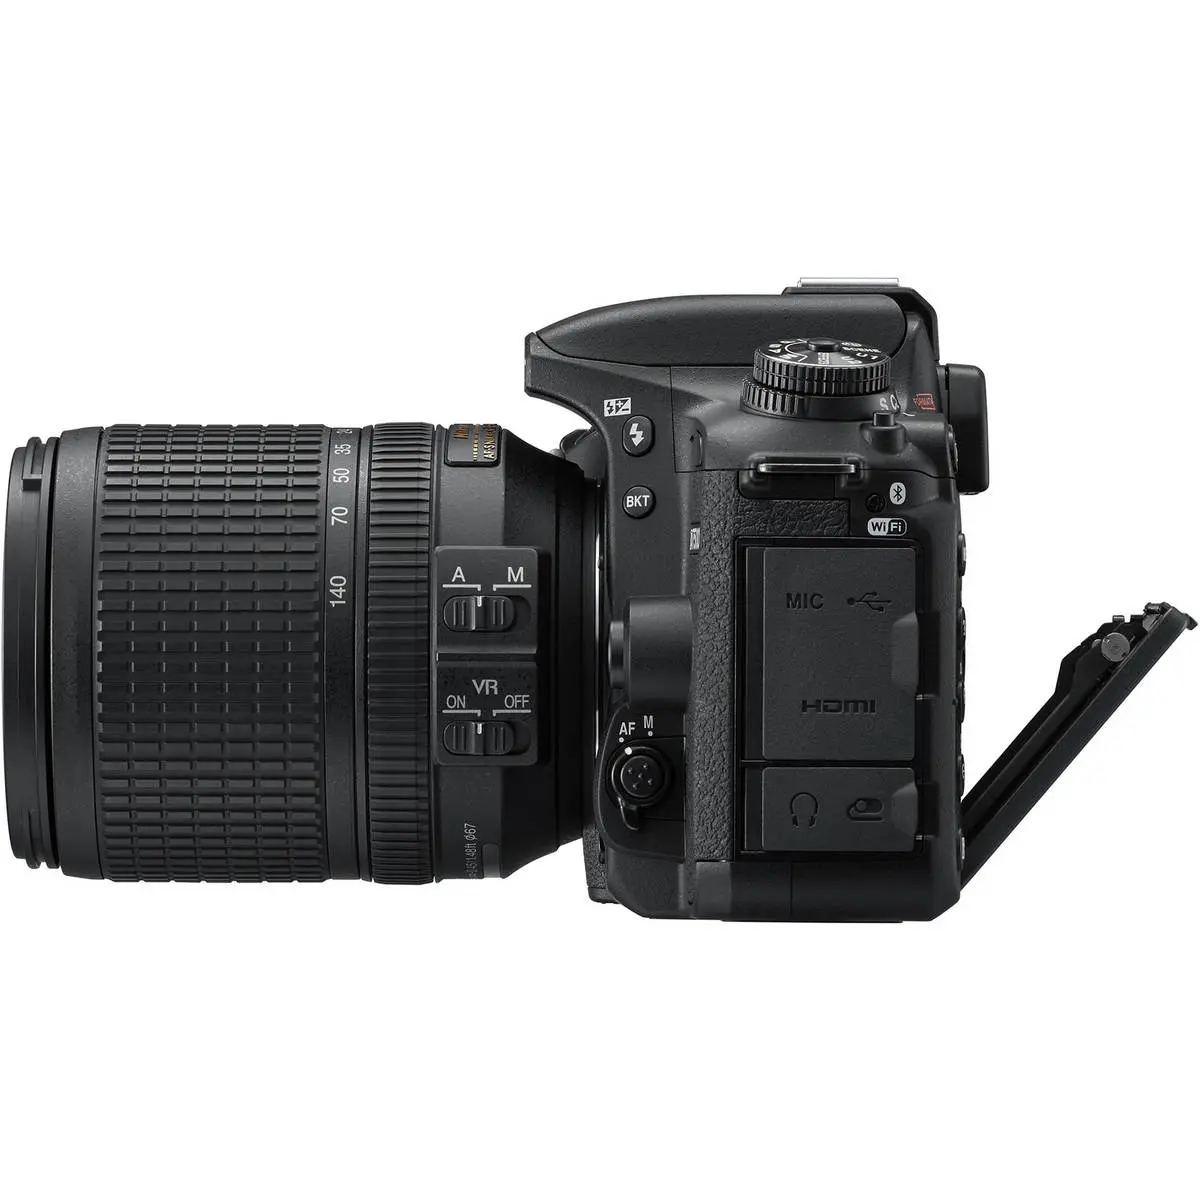 8. Nikon D7500 18-140 kit 20.9MP 4K UltraHD Digital SLR Camera